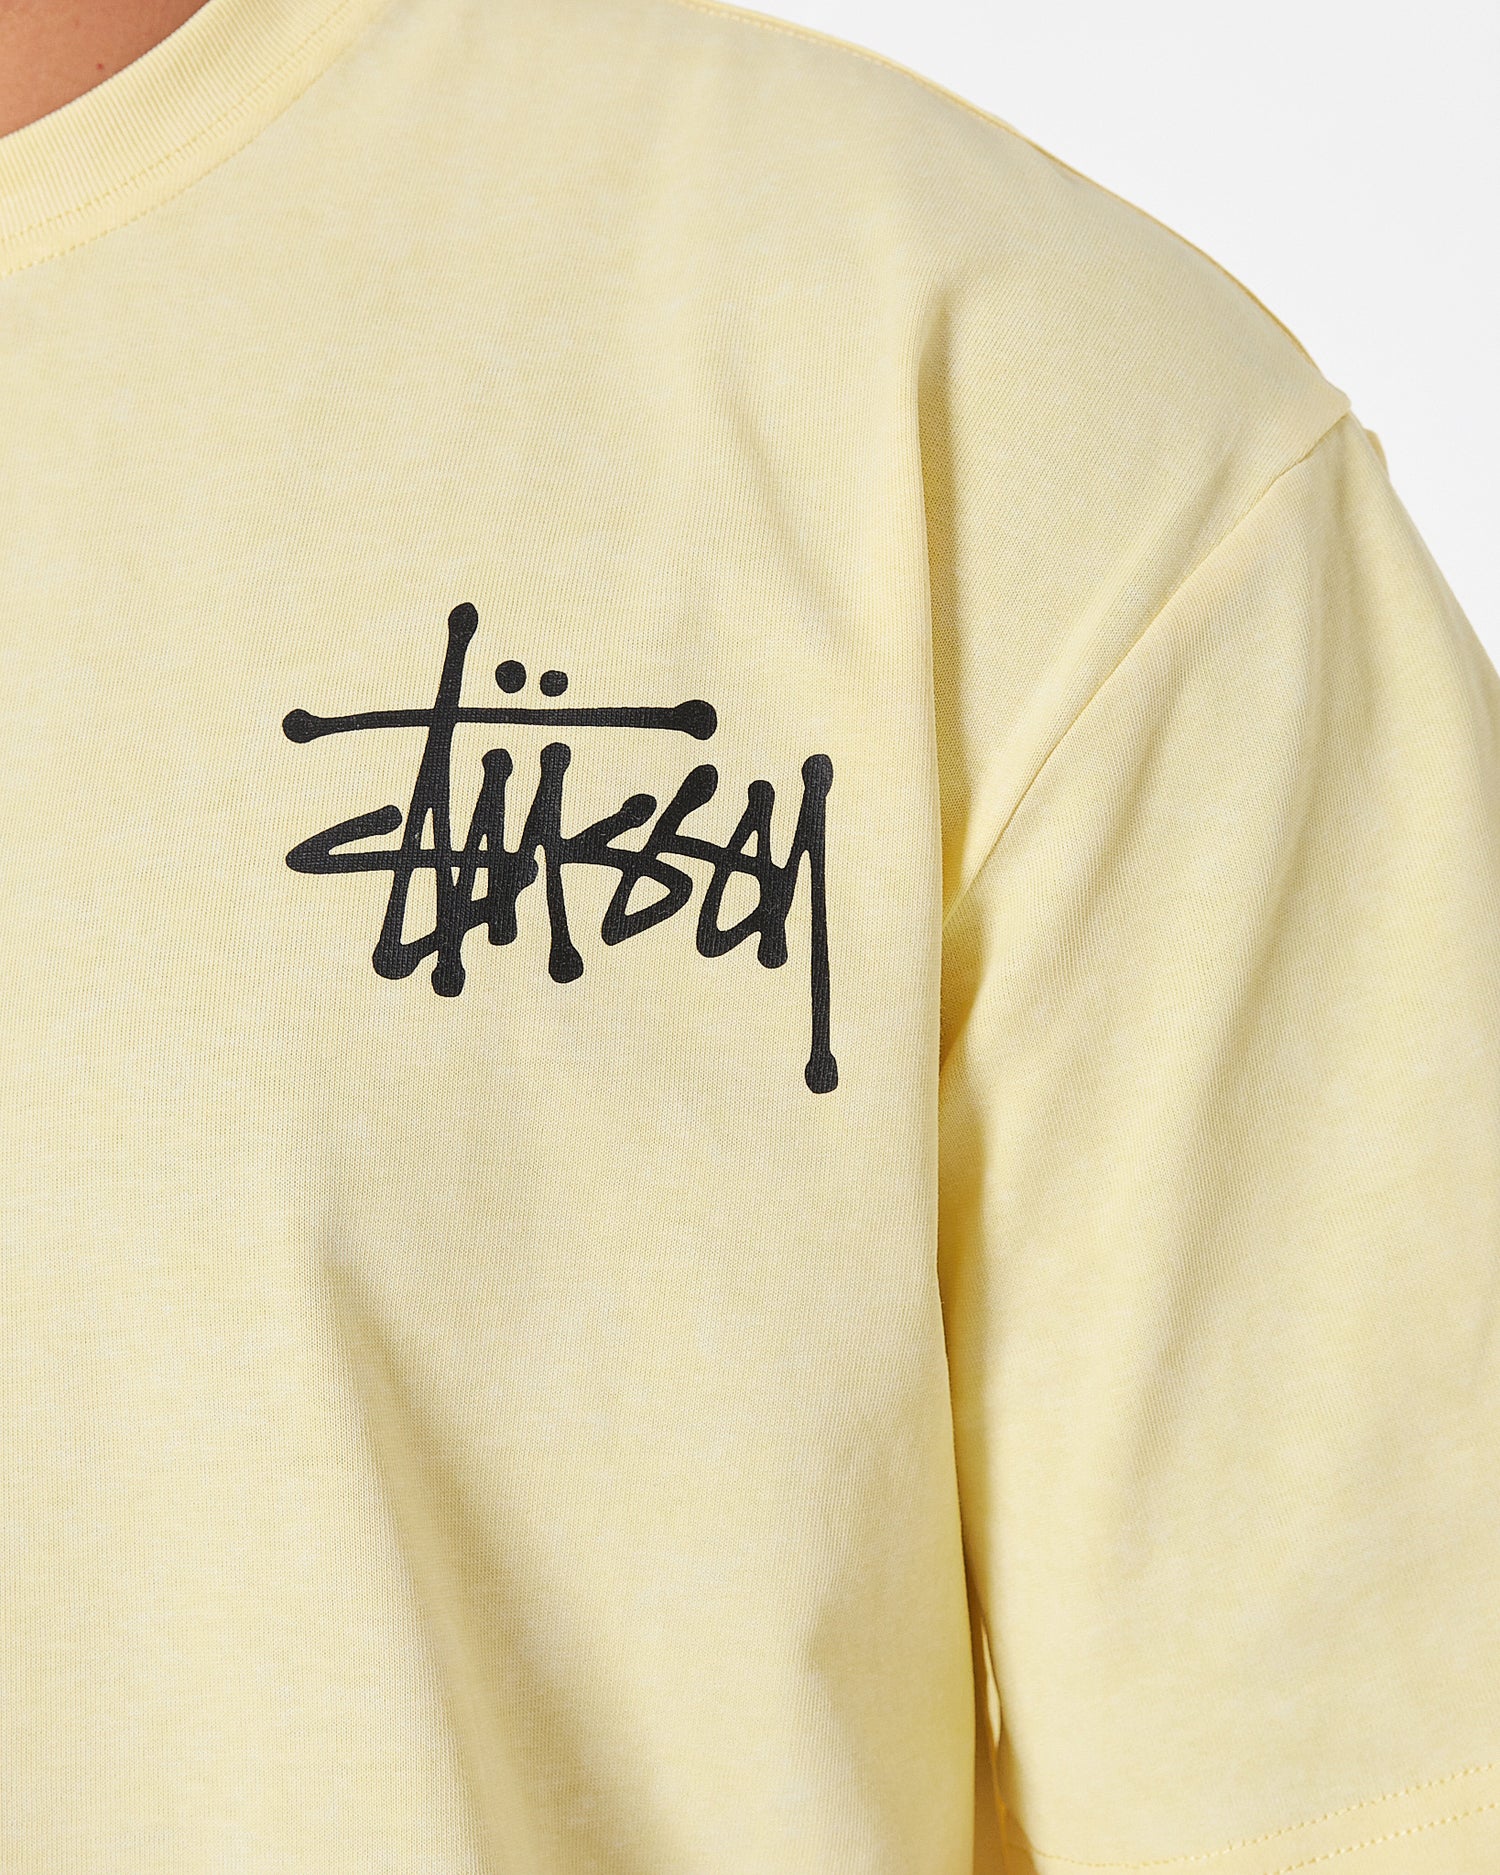 STU Back Logo Printed Men Yellow T-Shirt 20.90